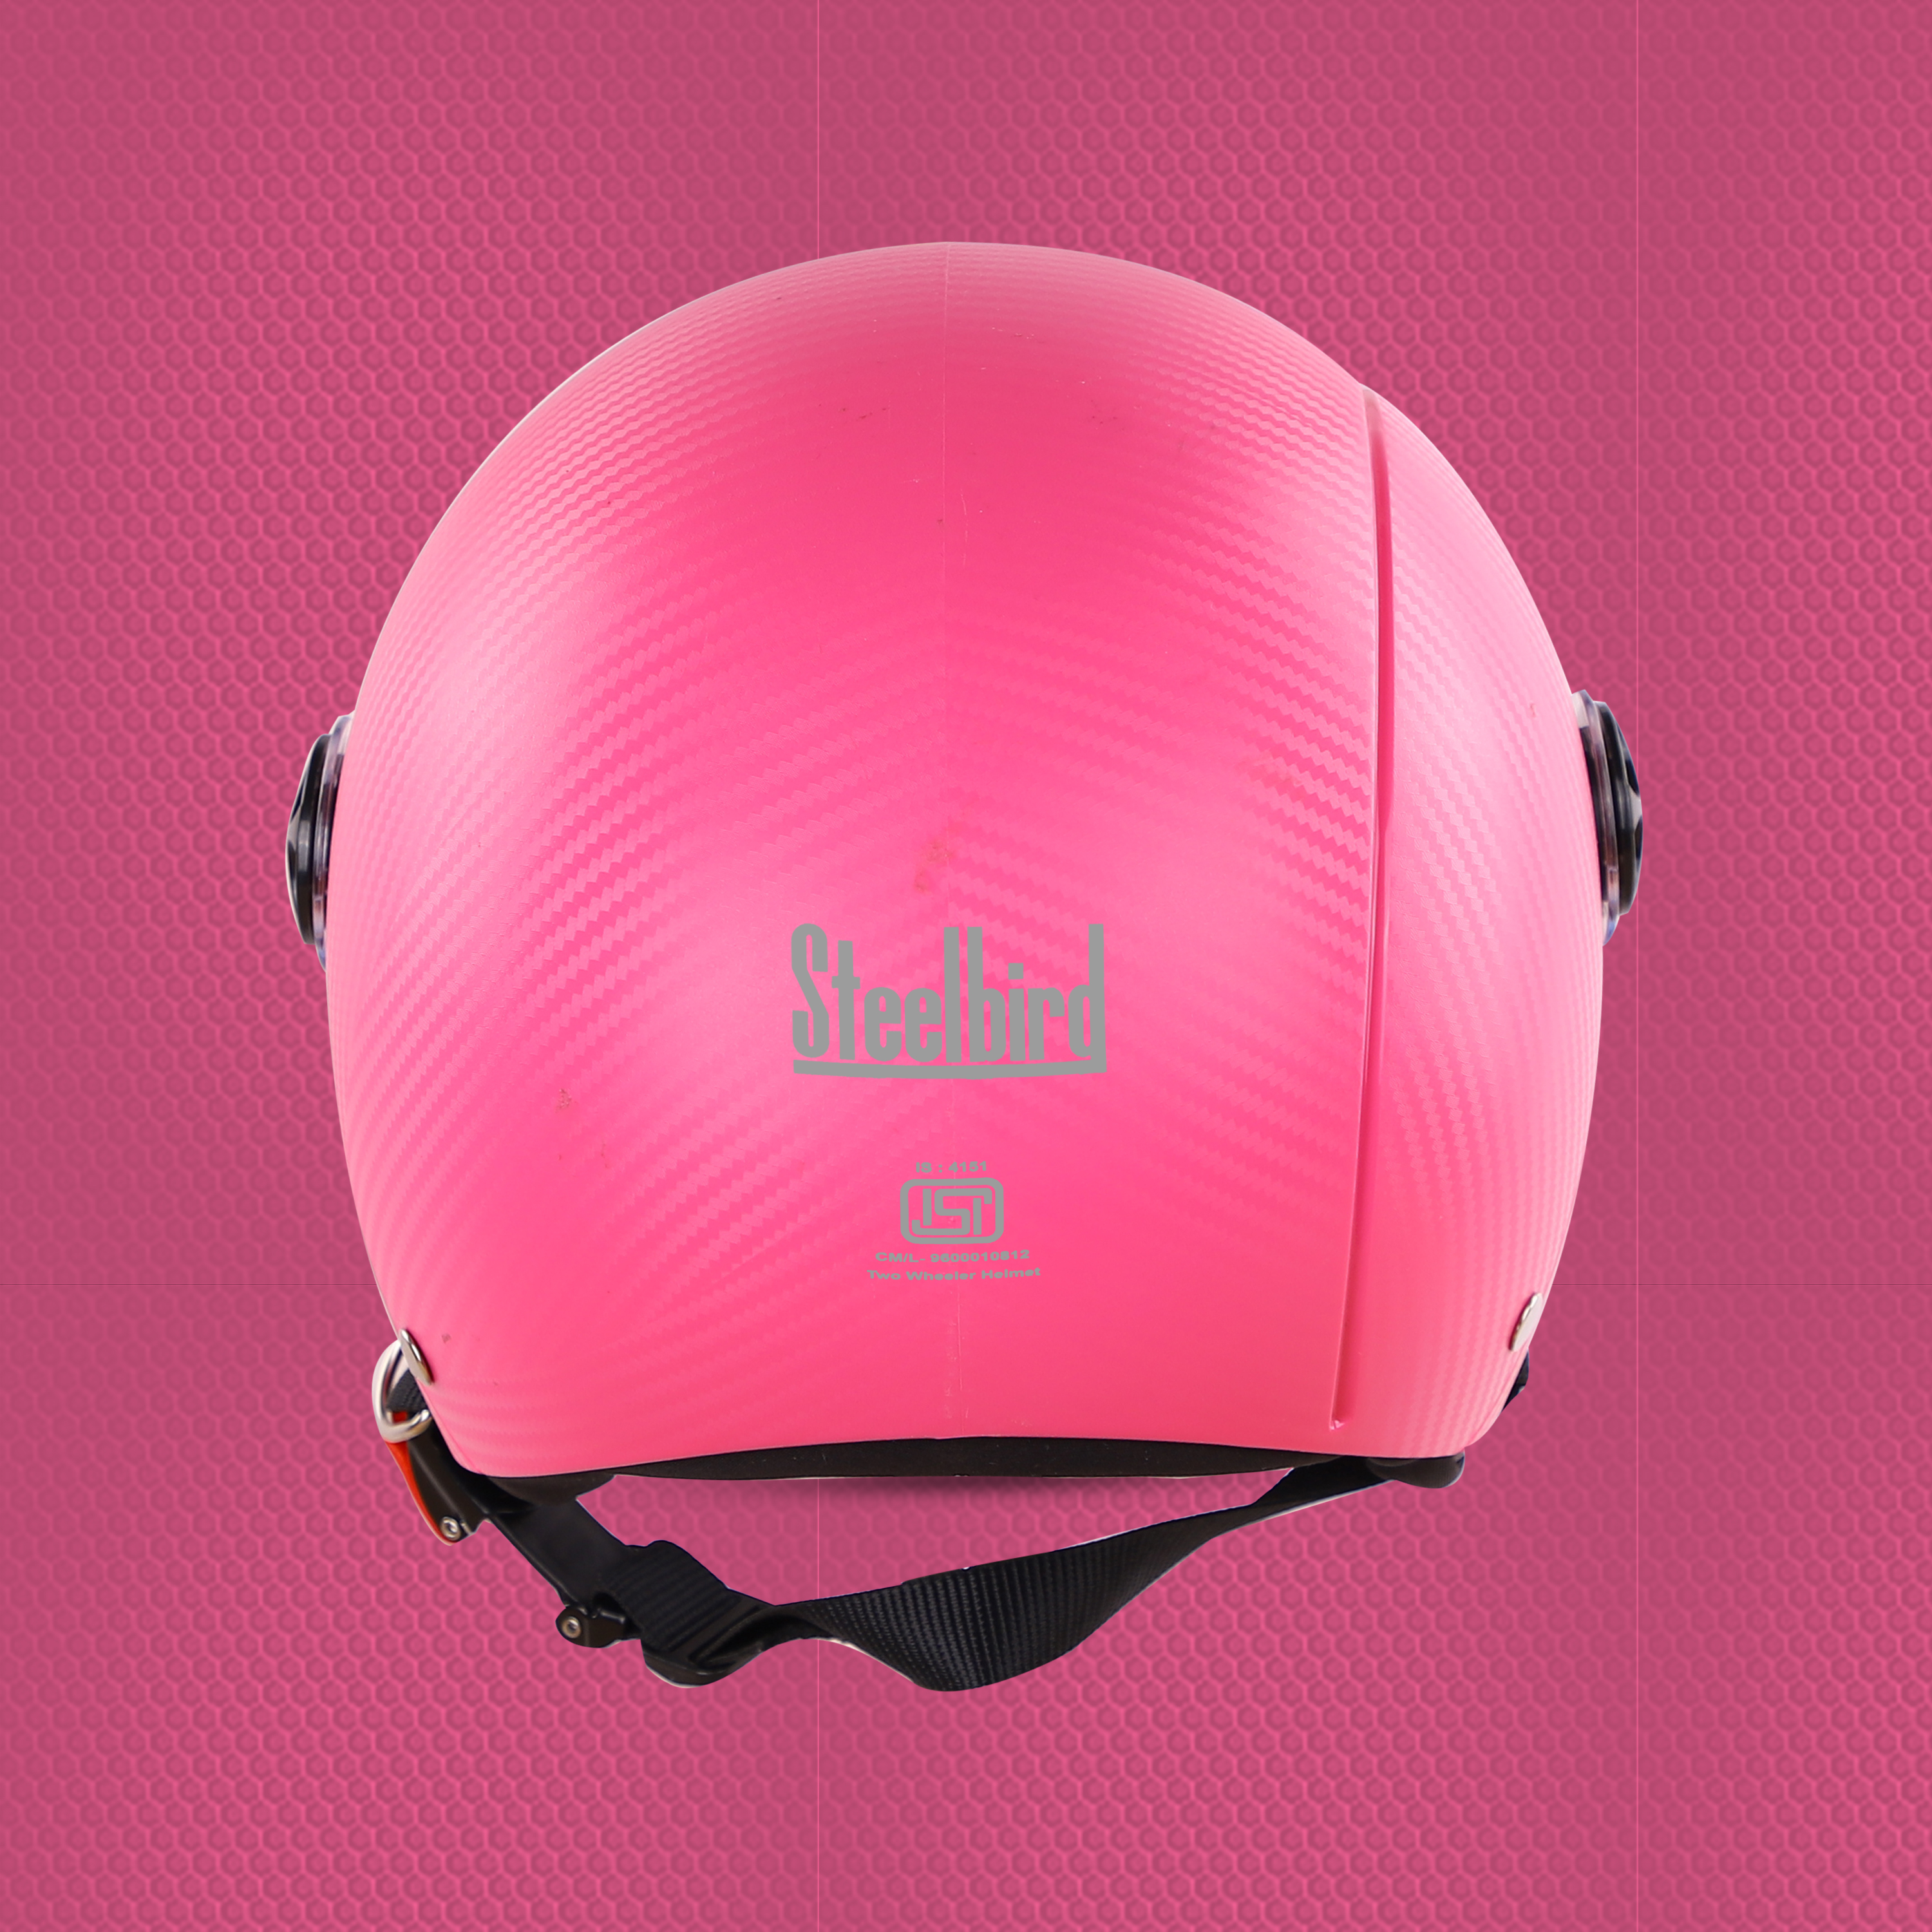 Steelbird SBH-16 Furor ISI Certified Open Face Helmet (Dashing Pink With Clear Visor)